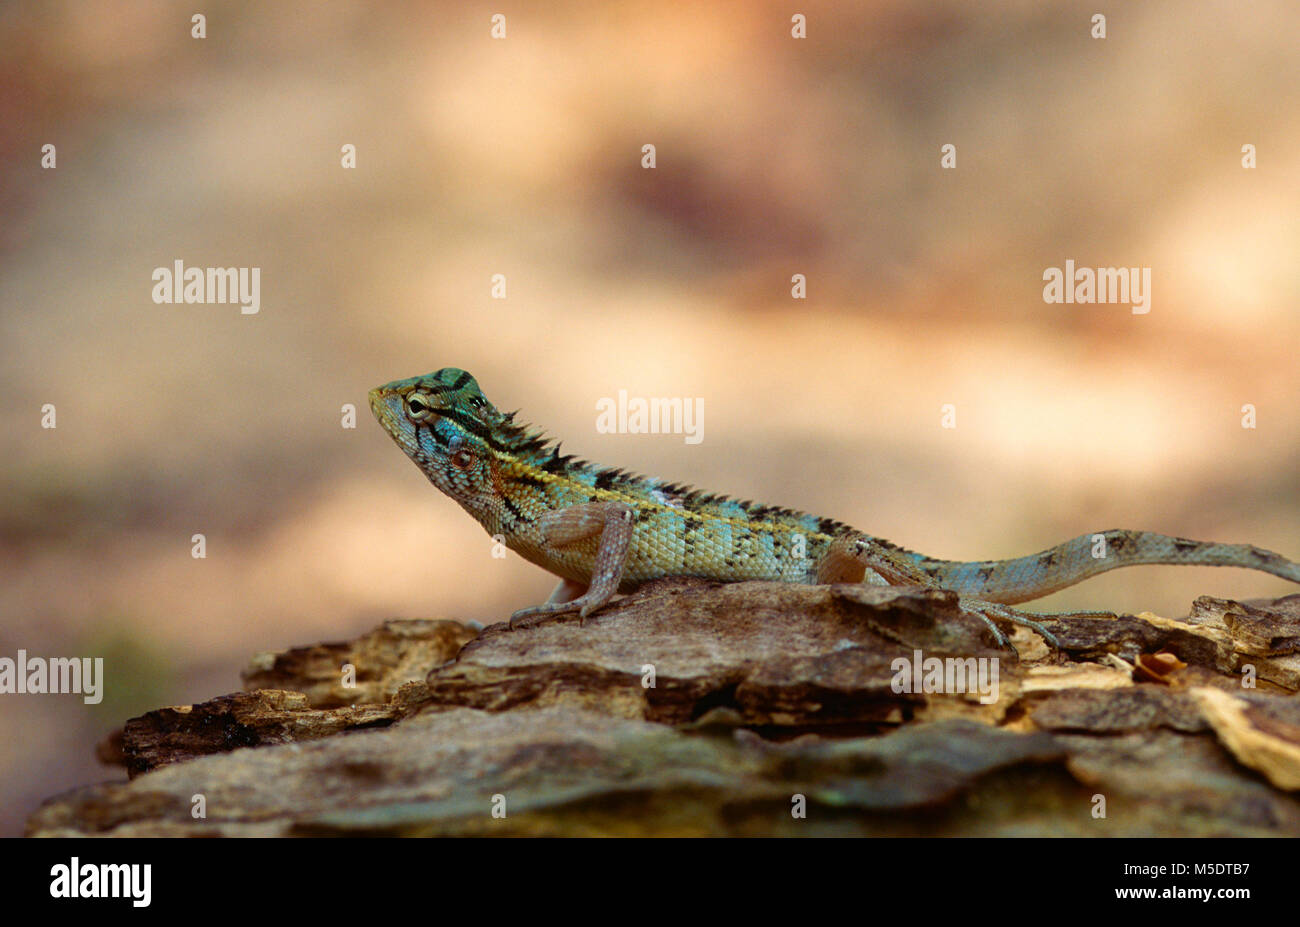 Wiegmann - Agama, Otocryptis wiegmanni, Agamidae, Lizard, Reptilien, Tier, Sri Lanka Stockfoto